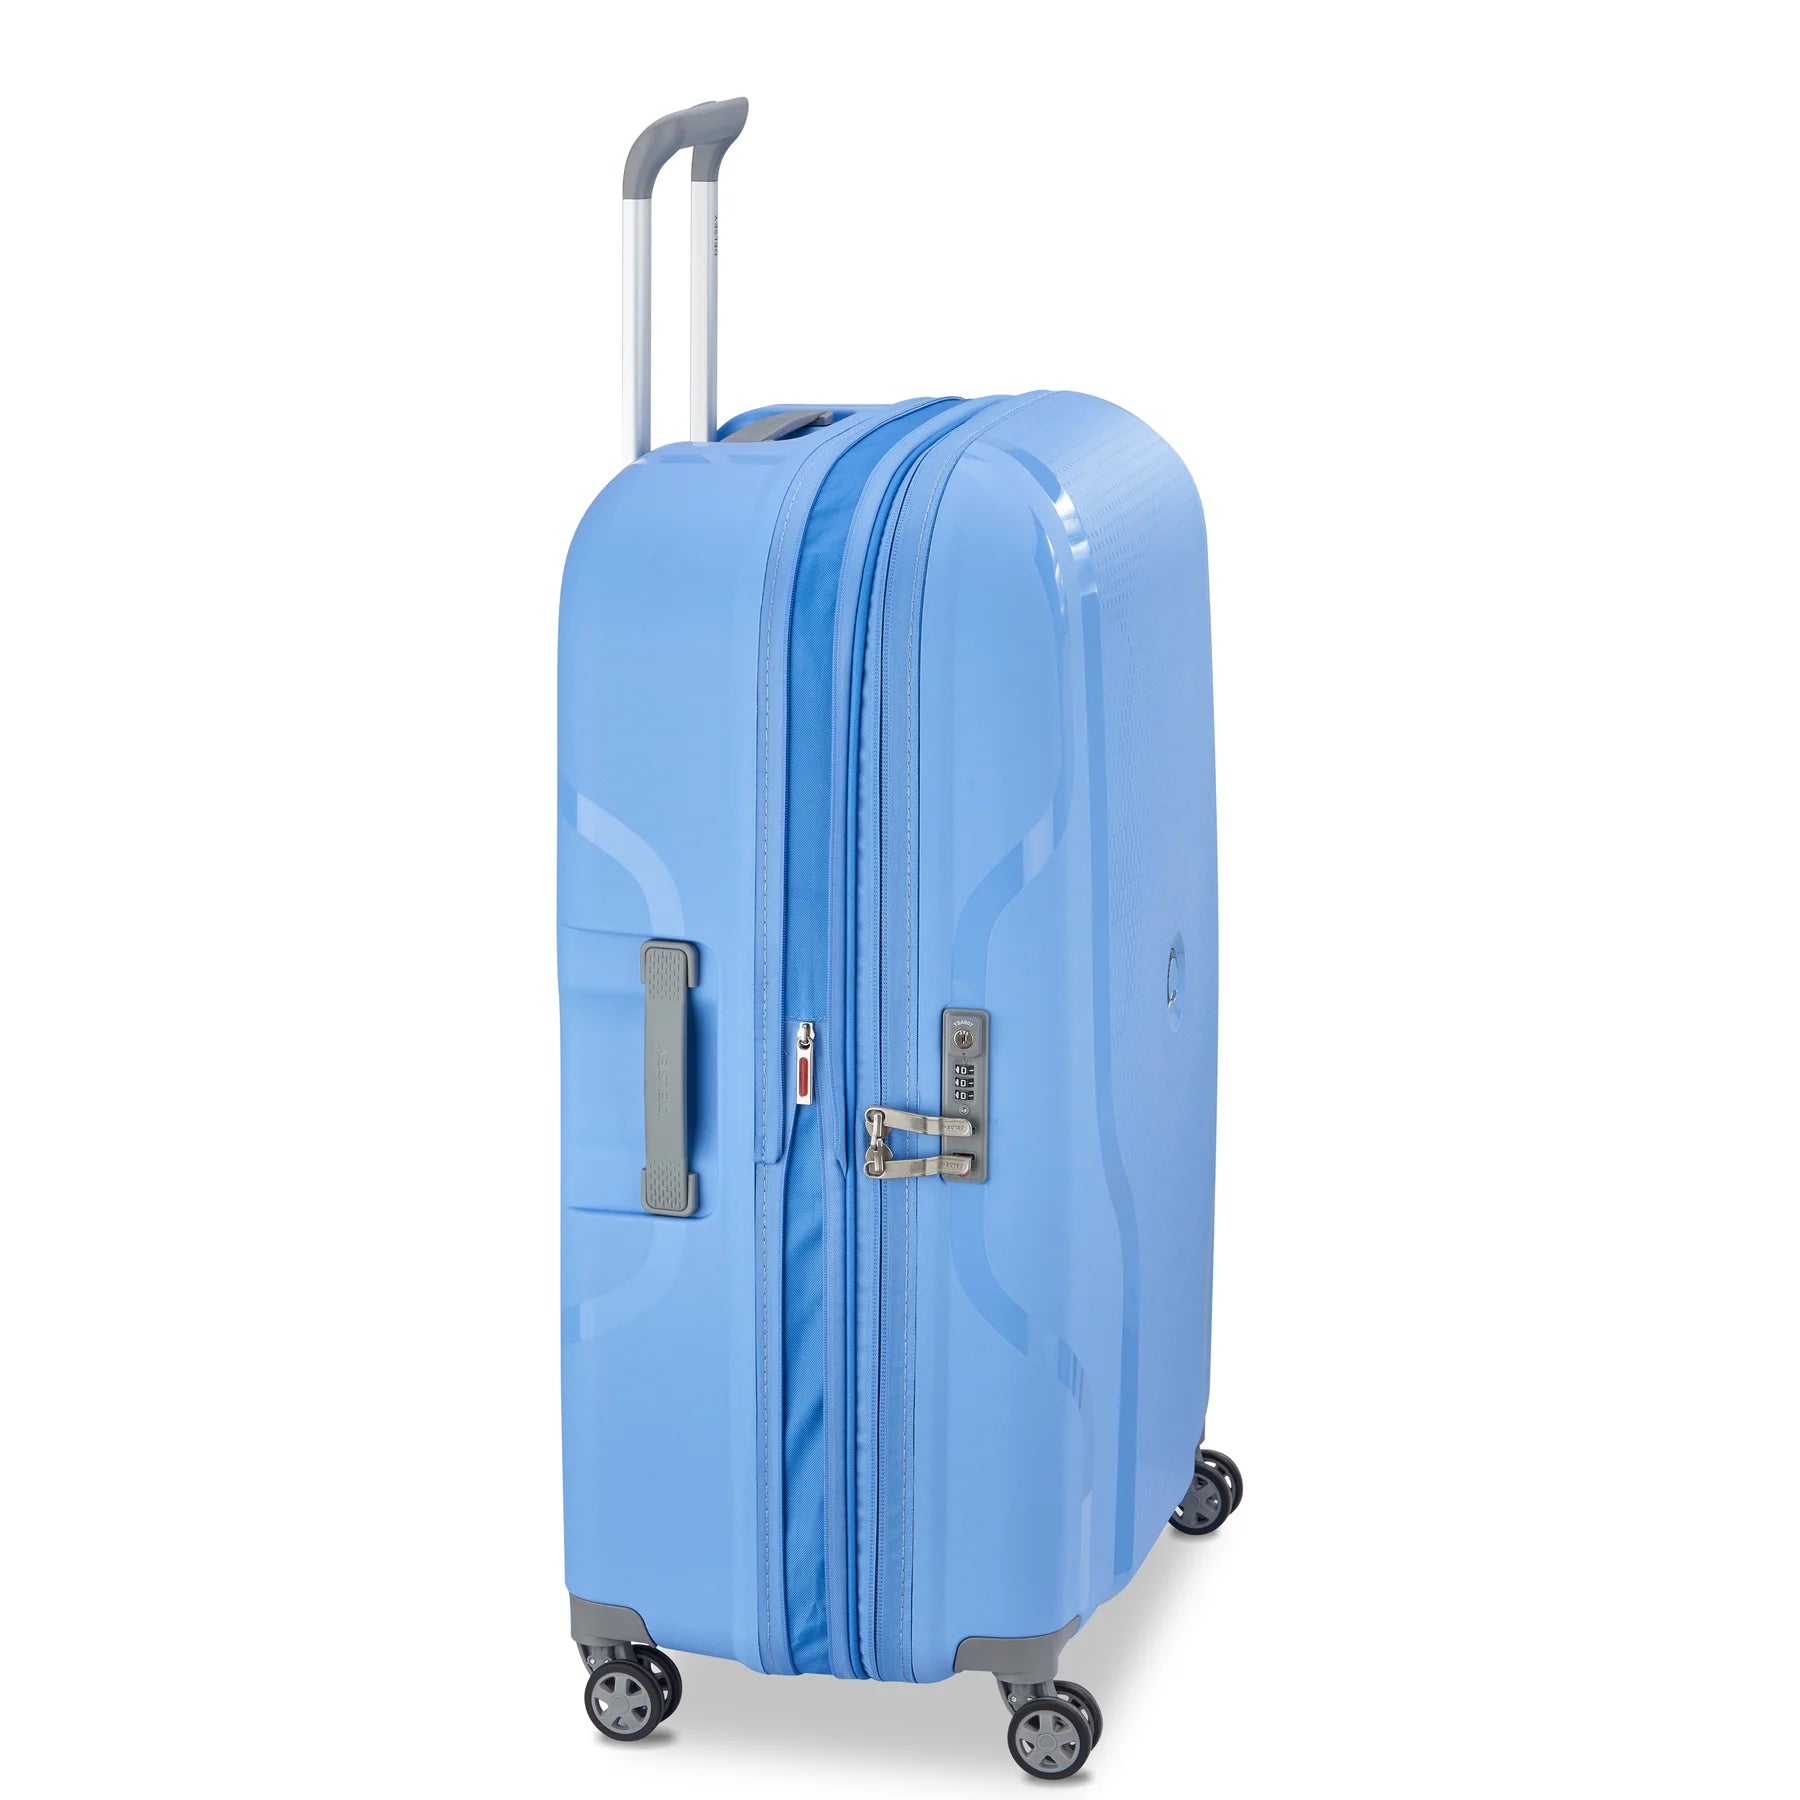 Delsey Clavel Hard Stor Utvidbar Koffert Med 4 Hjul 76 cm Lavender Blue